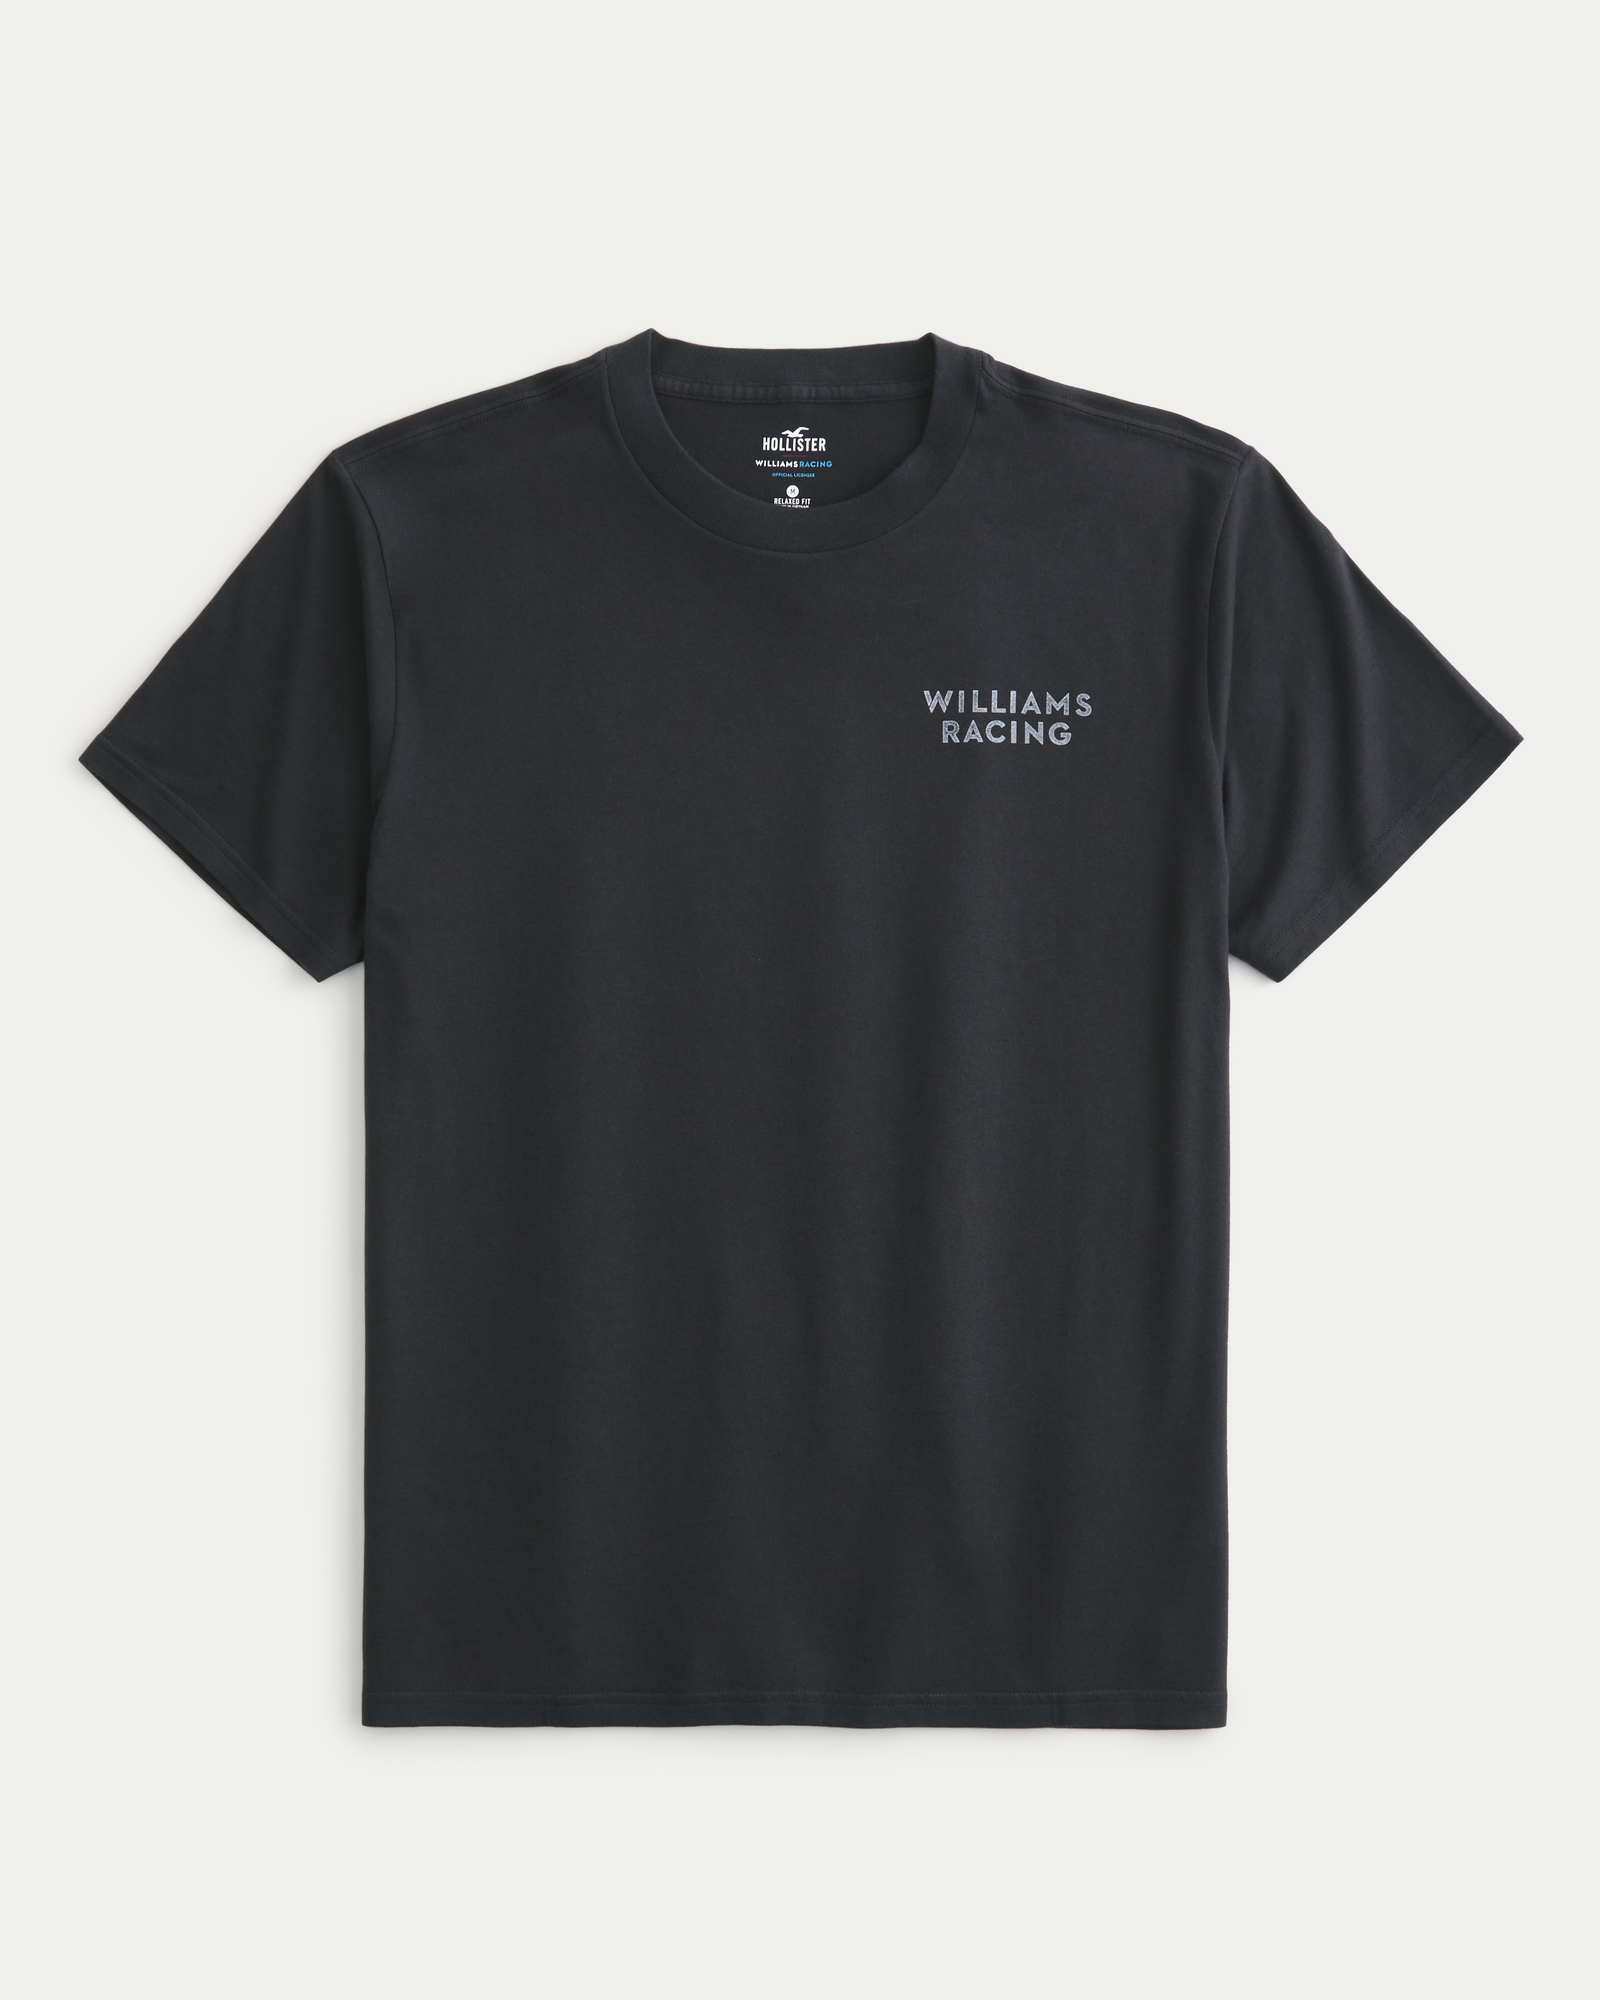 Hollister T-shirts - Men - Philippines price